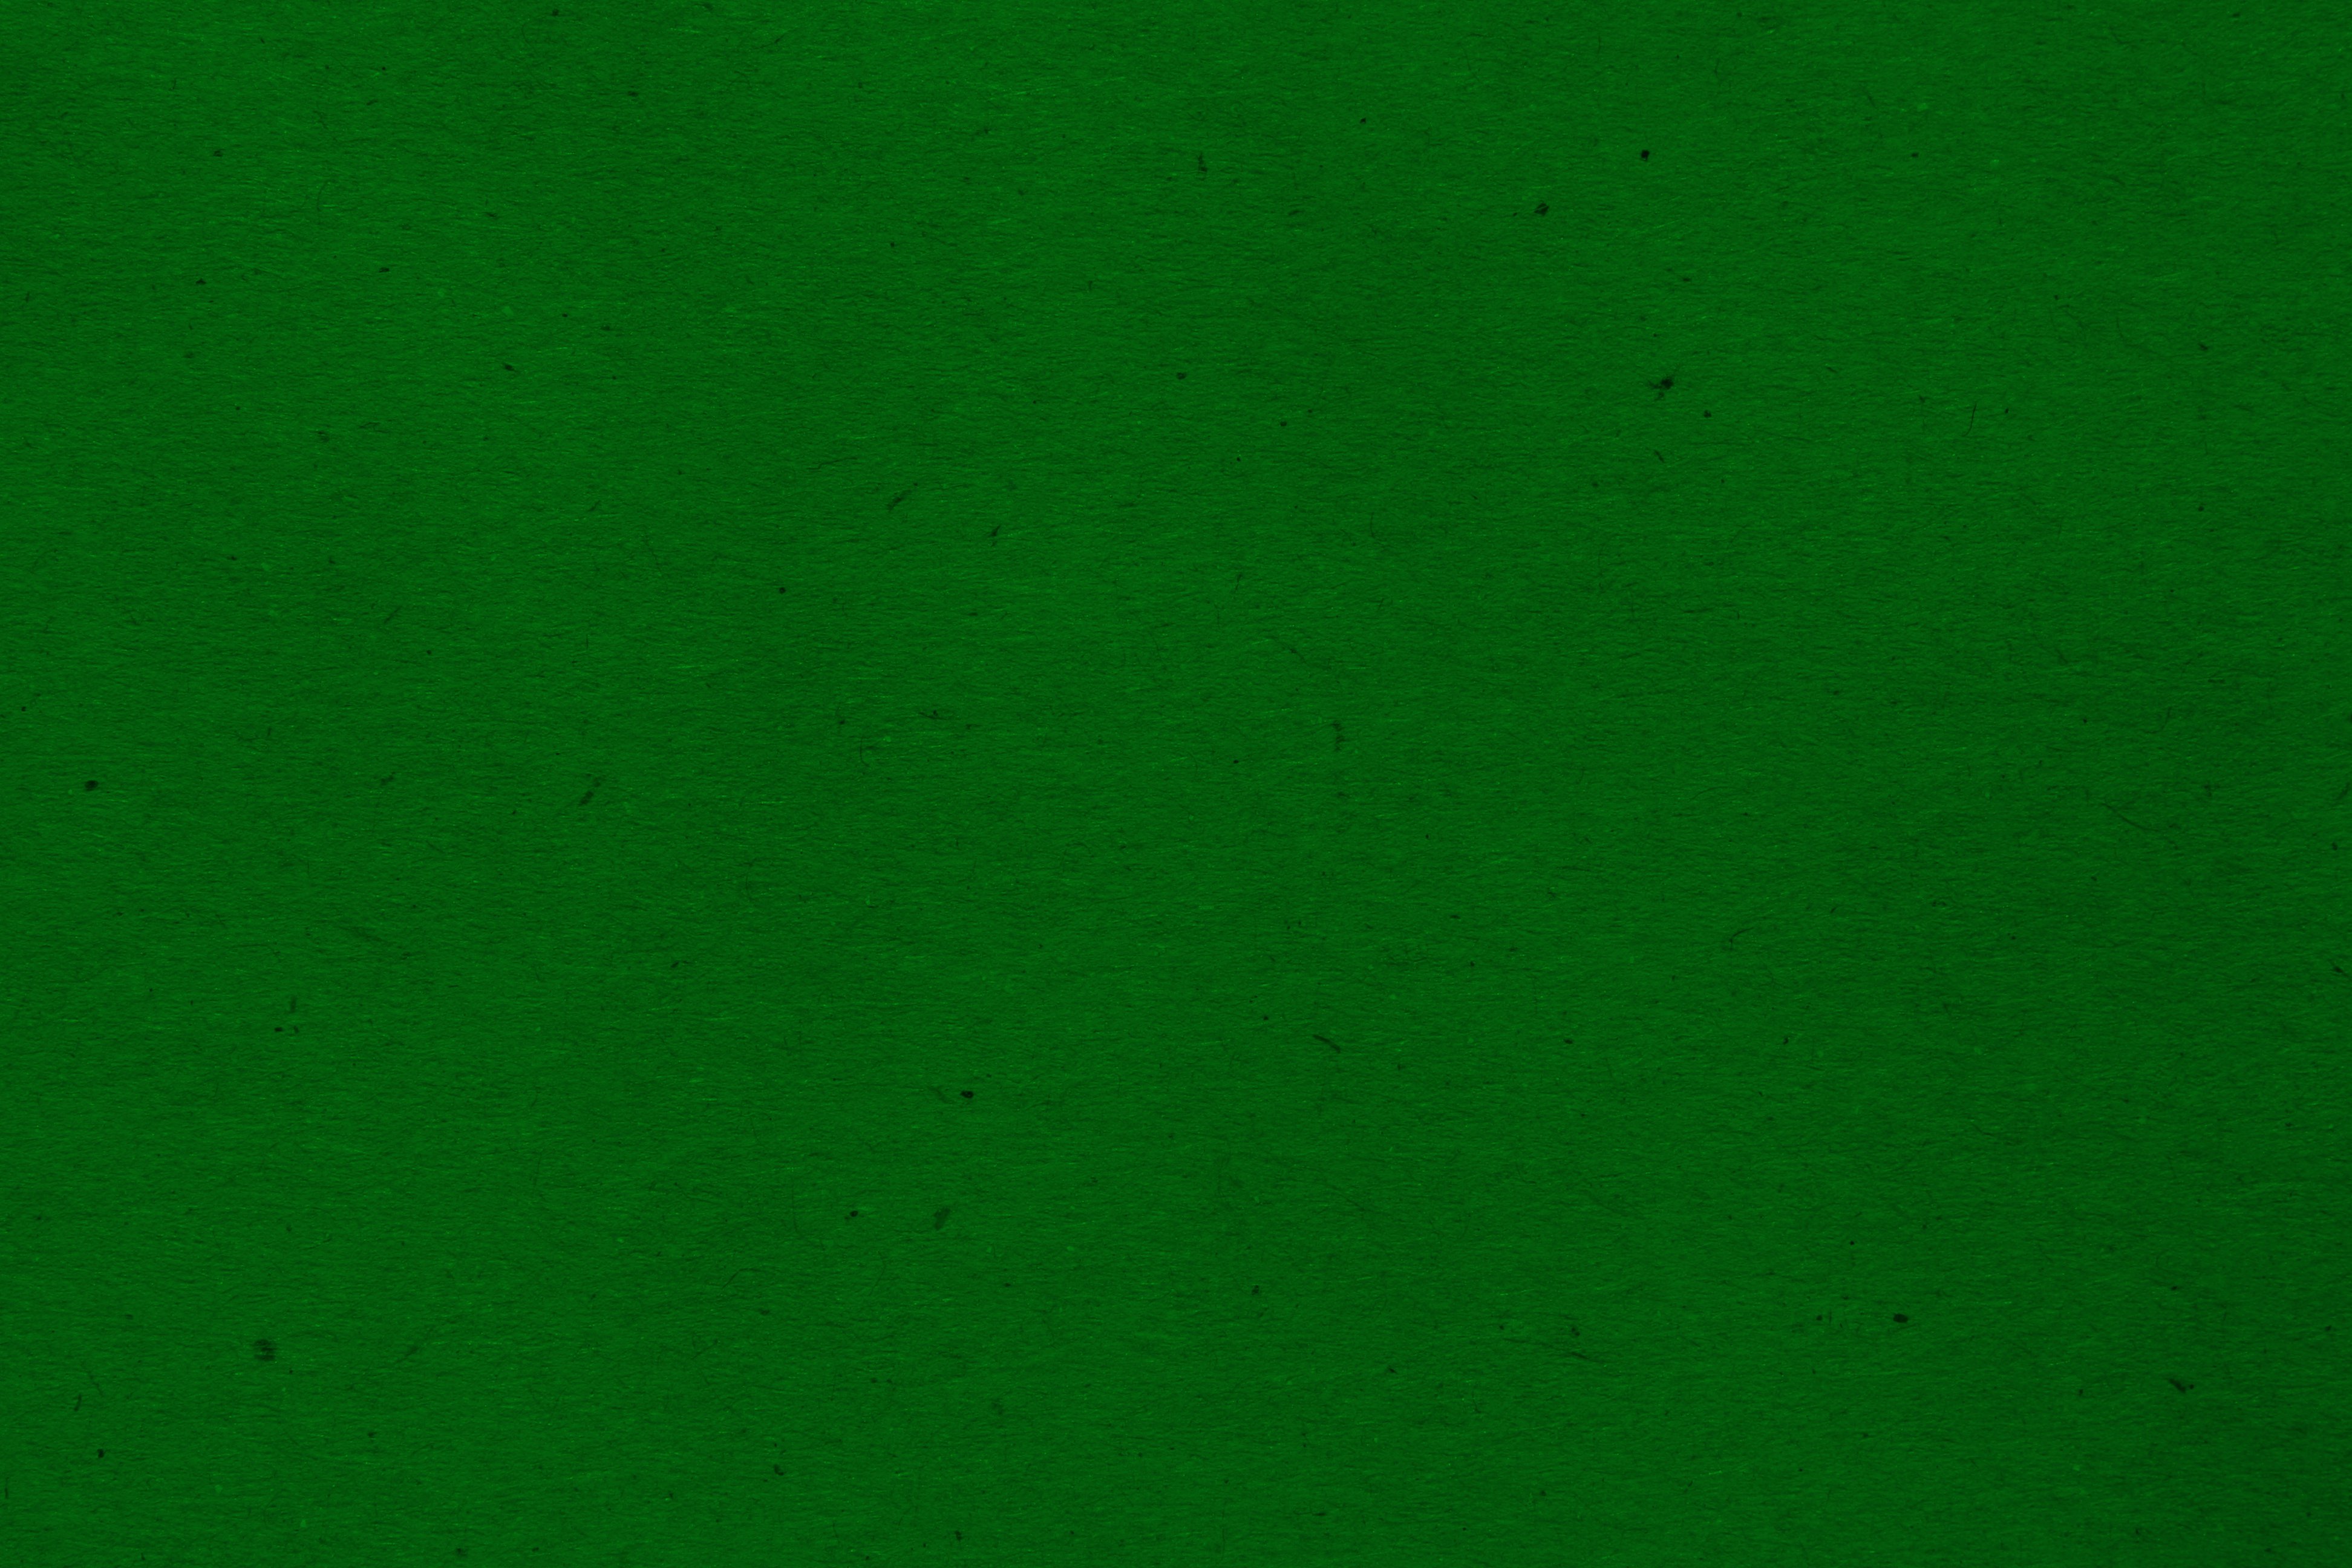  kelly green high resolution image 640 x 480 4 kb jpeg kelly green